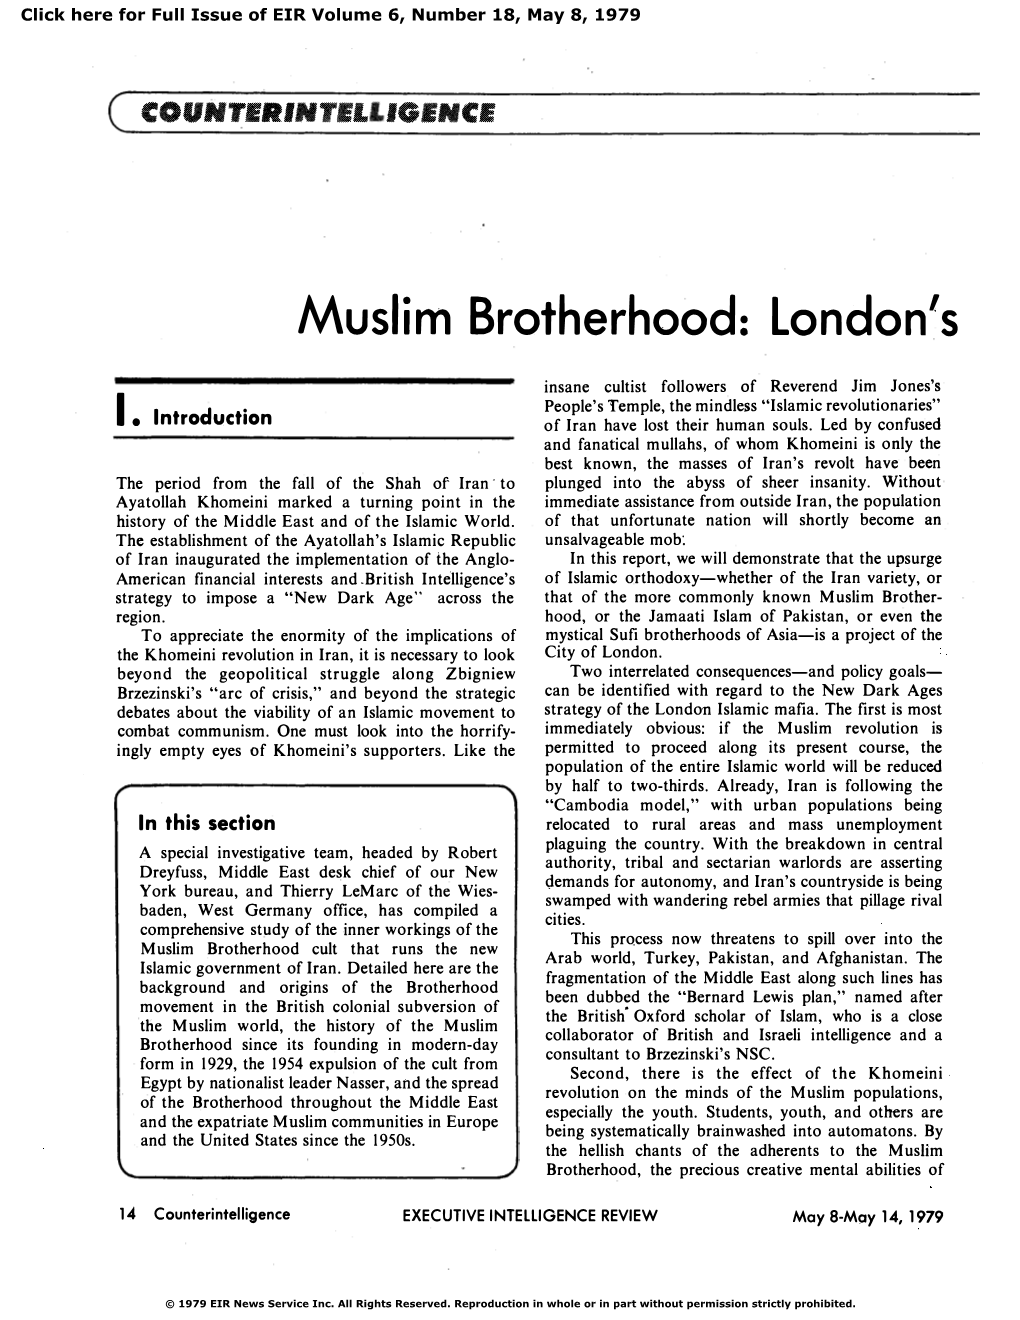 Muslim Brotherhood Cult That Runs the New Arab World, Turkey, Pakistan, and Afghanistan